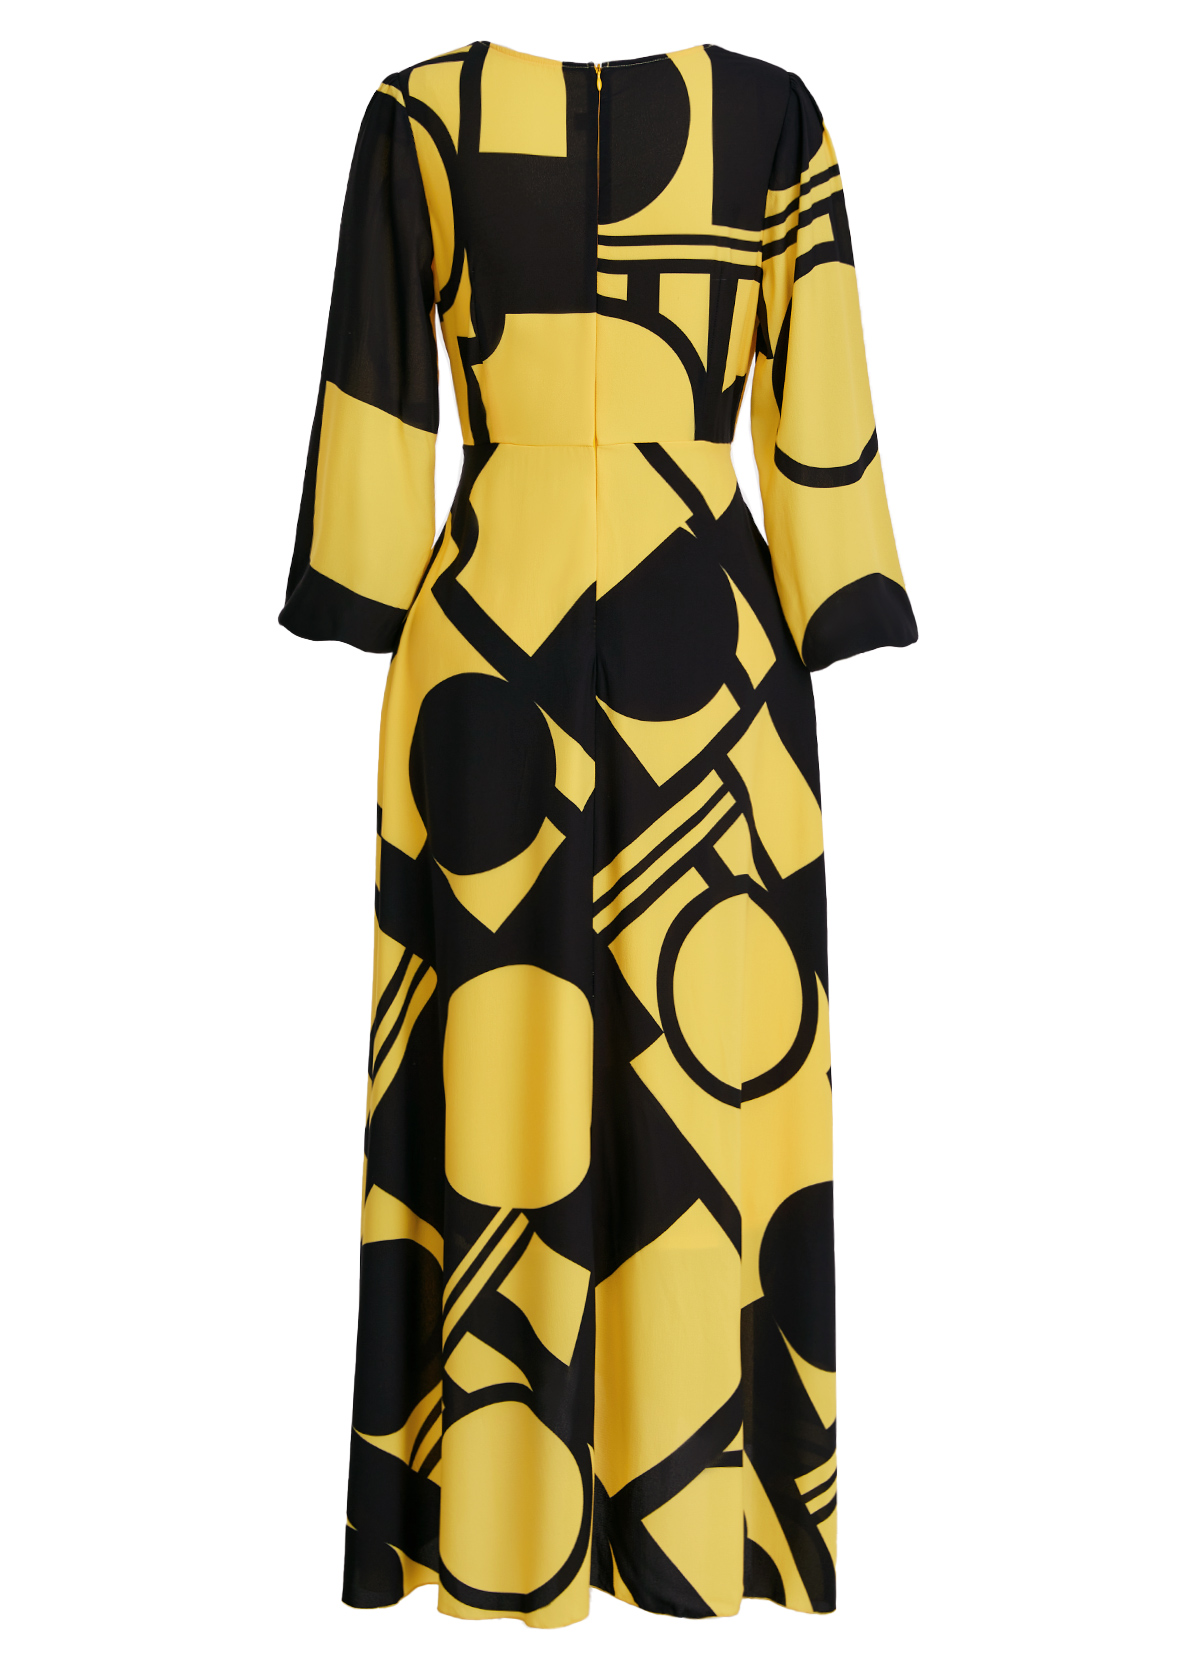 Light Yellow Cross Hem Geometric Print High Low Dress